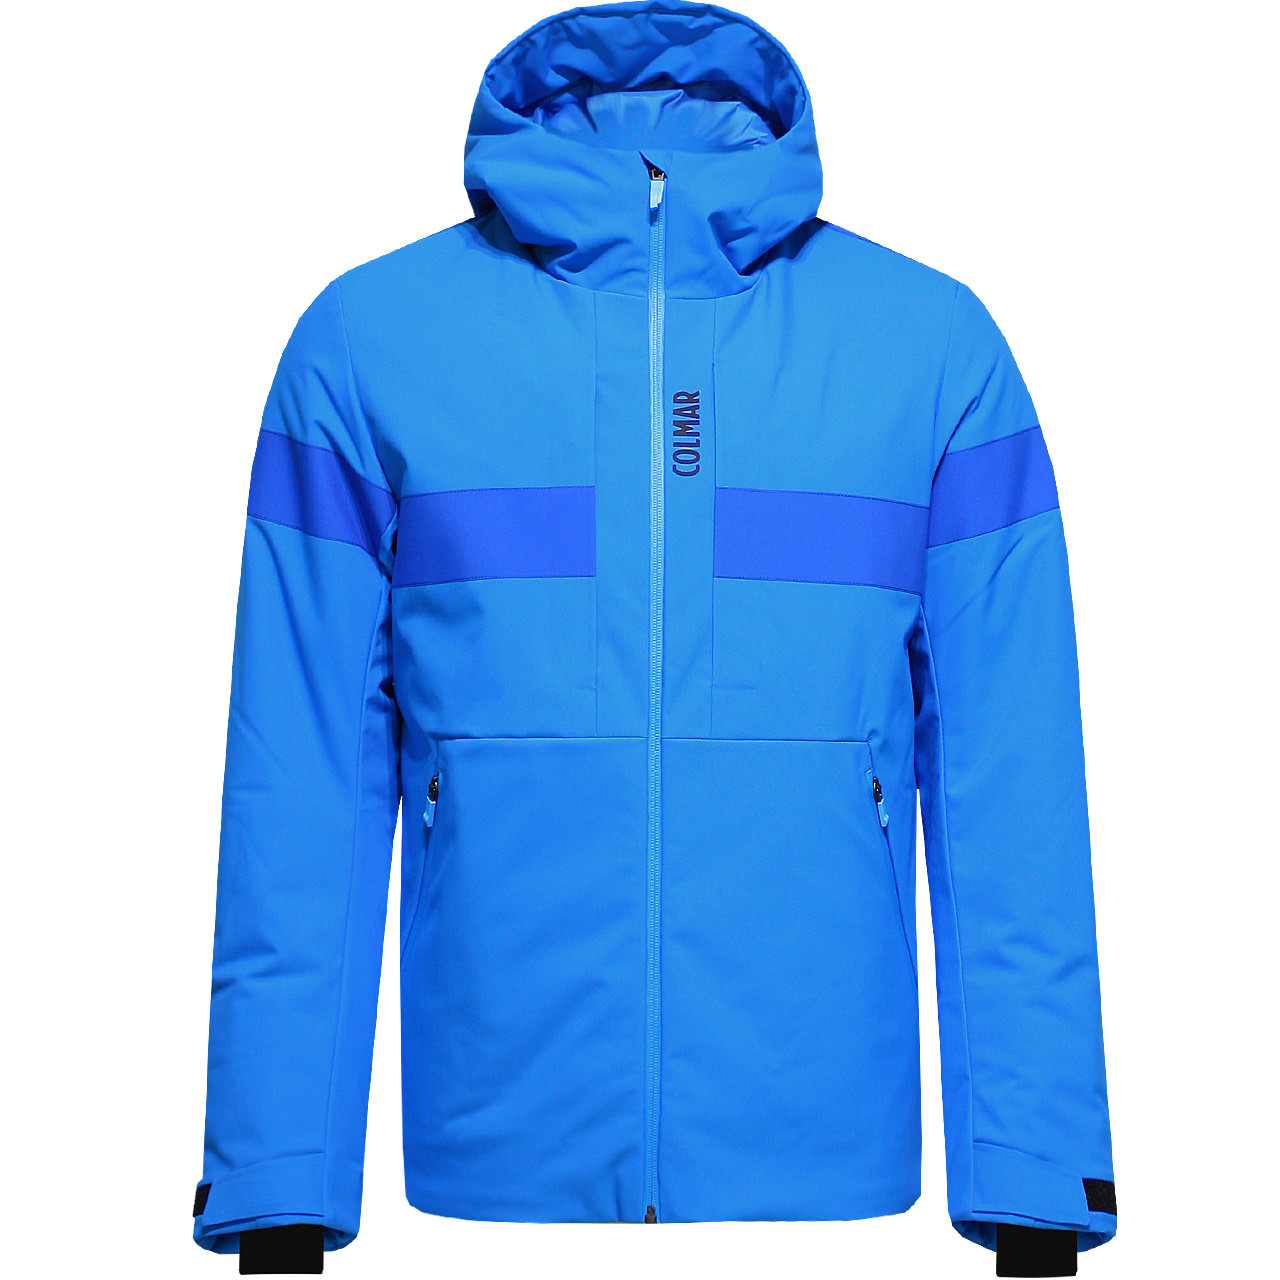 Colmar Men Ski Jacket CONTEMPORARY blue |Ski Jackets | Ski Clothing ...